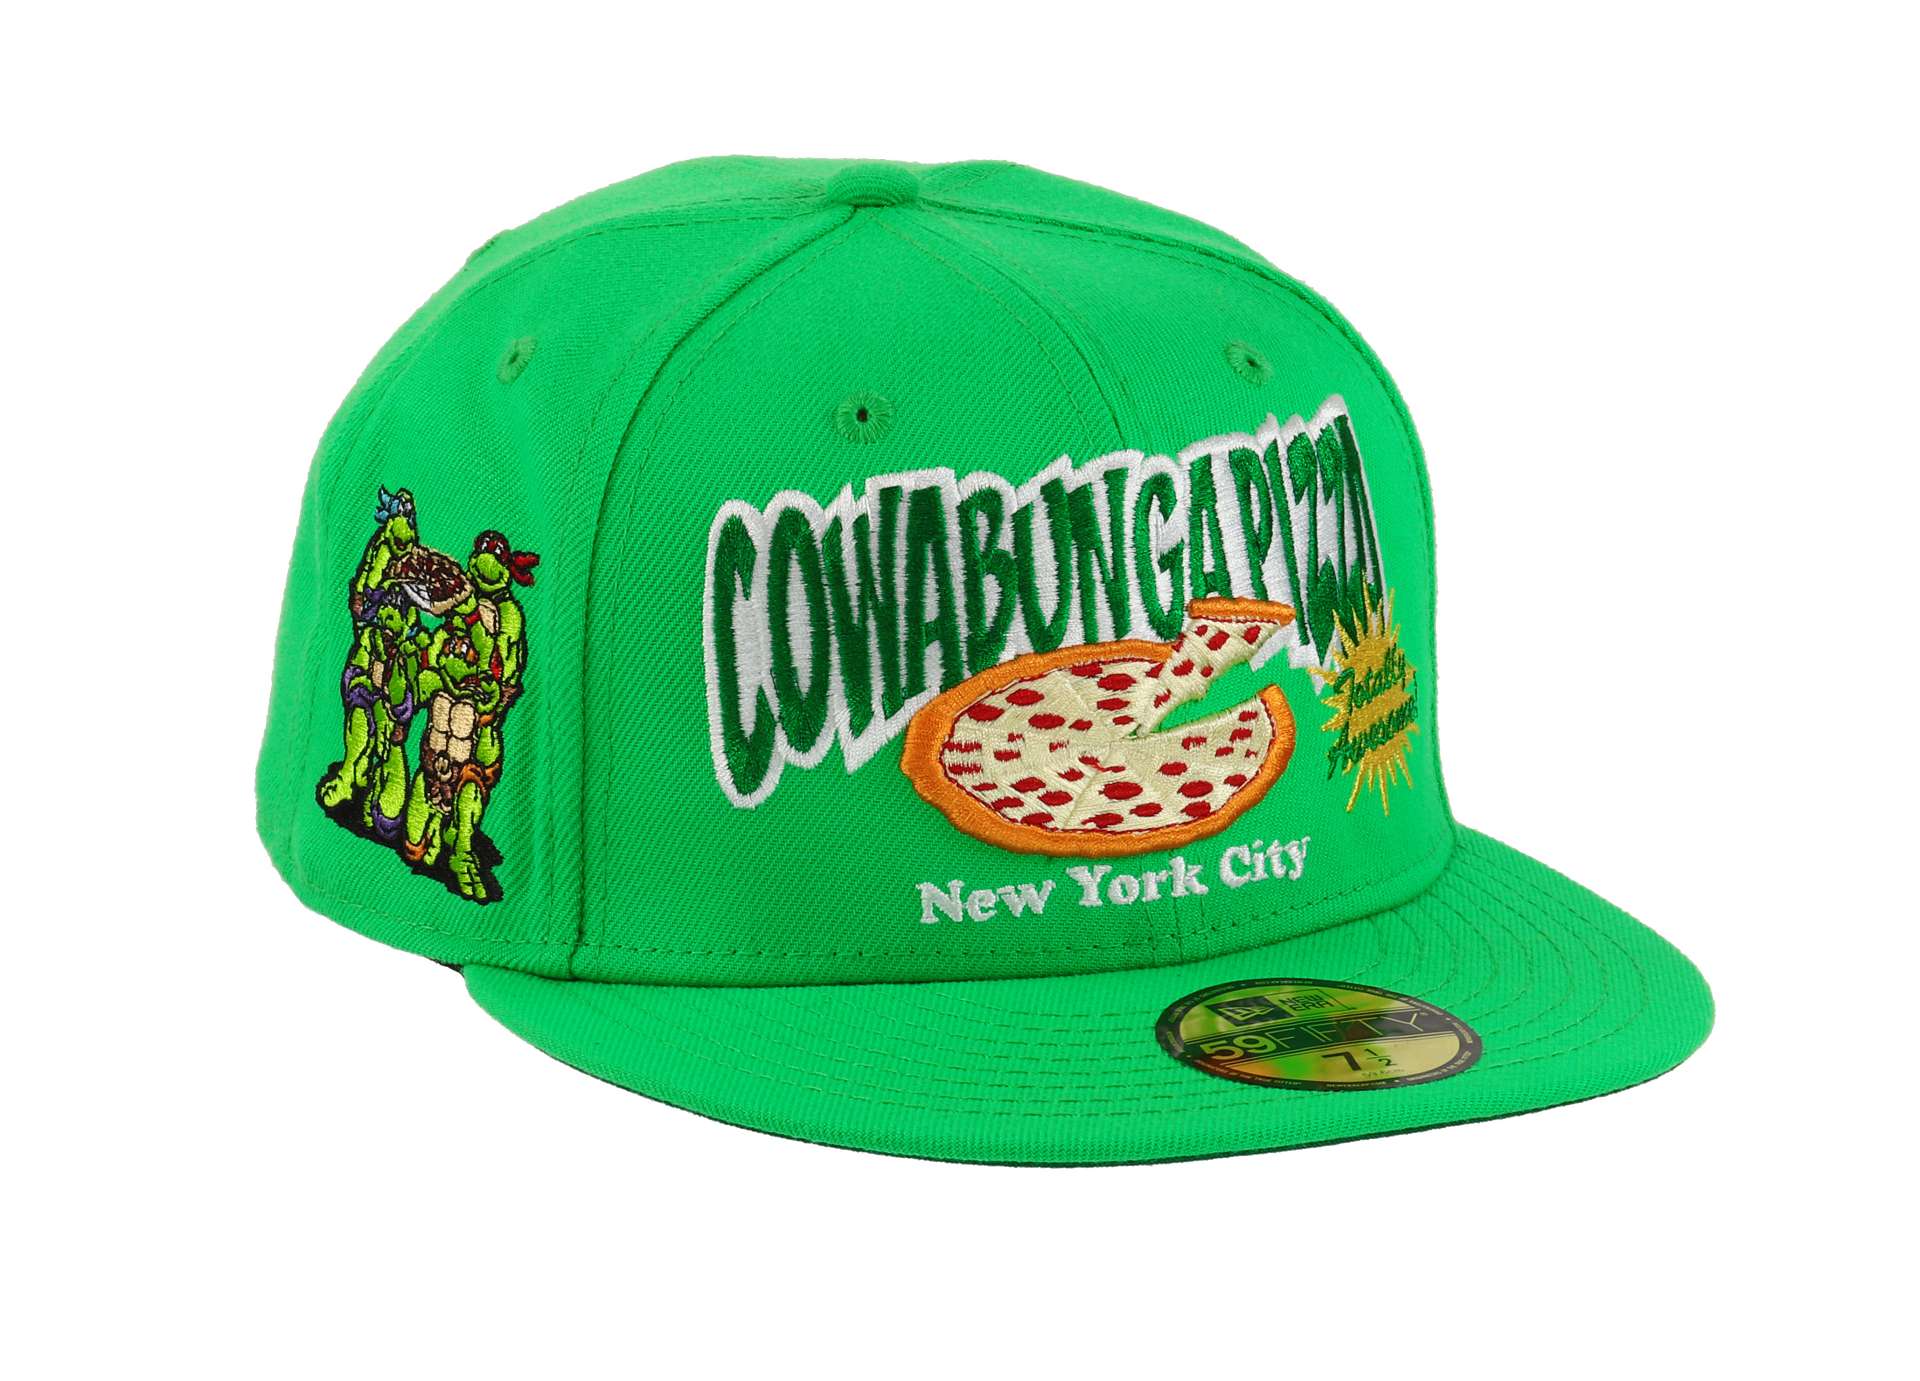 Cowabunga Pizza Ninja Turtles Island Green TMNT Edition 59Fifty Cap New Era